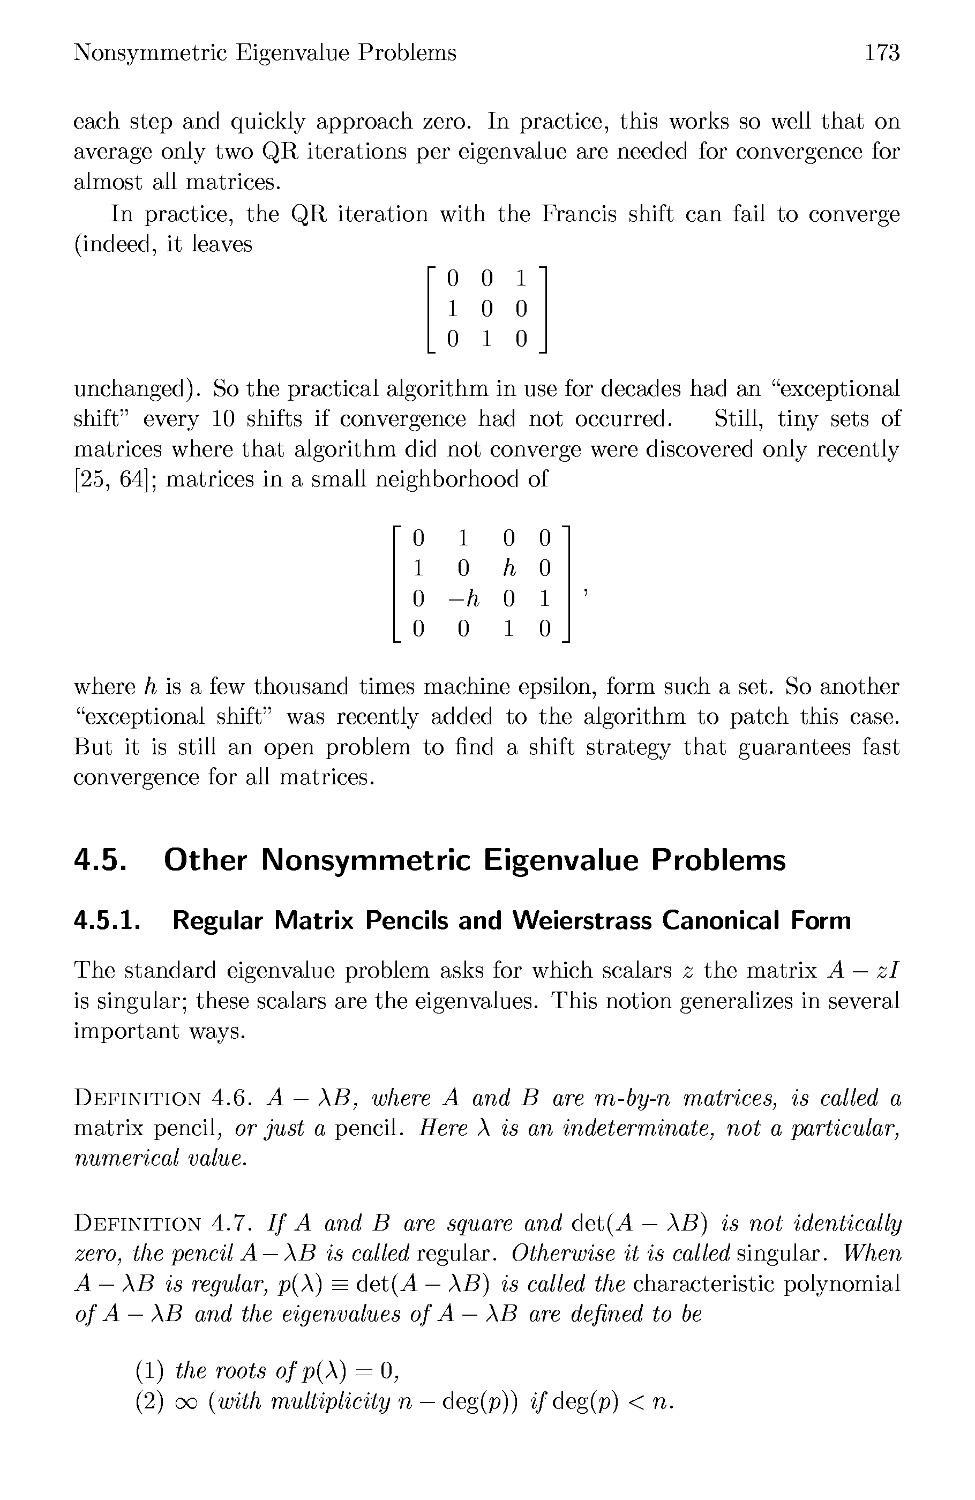 4.5 Other Nonsymmetric Eigenvalue Problems